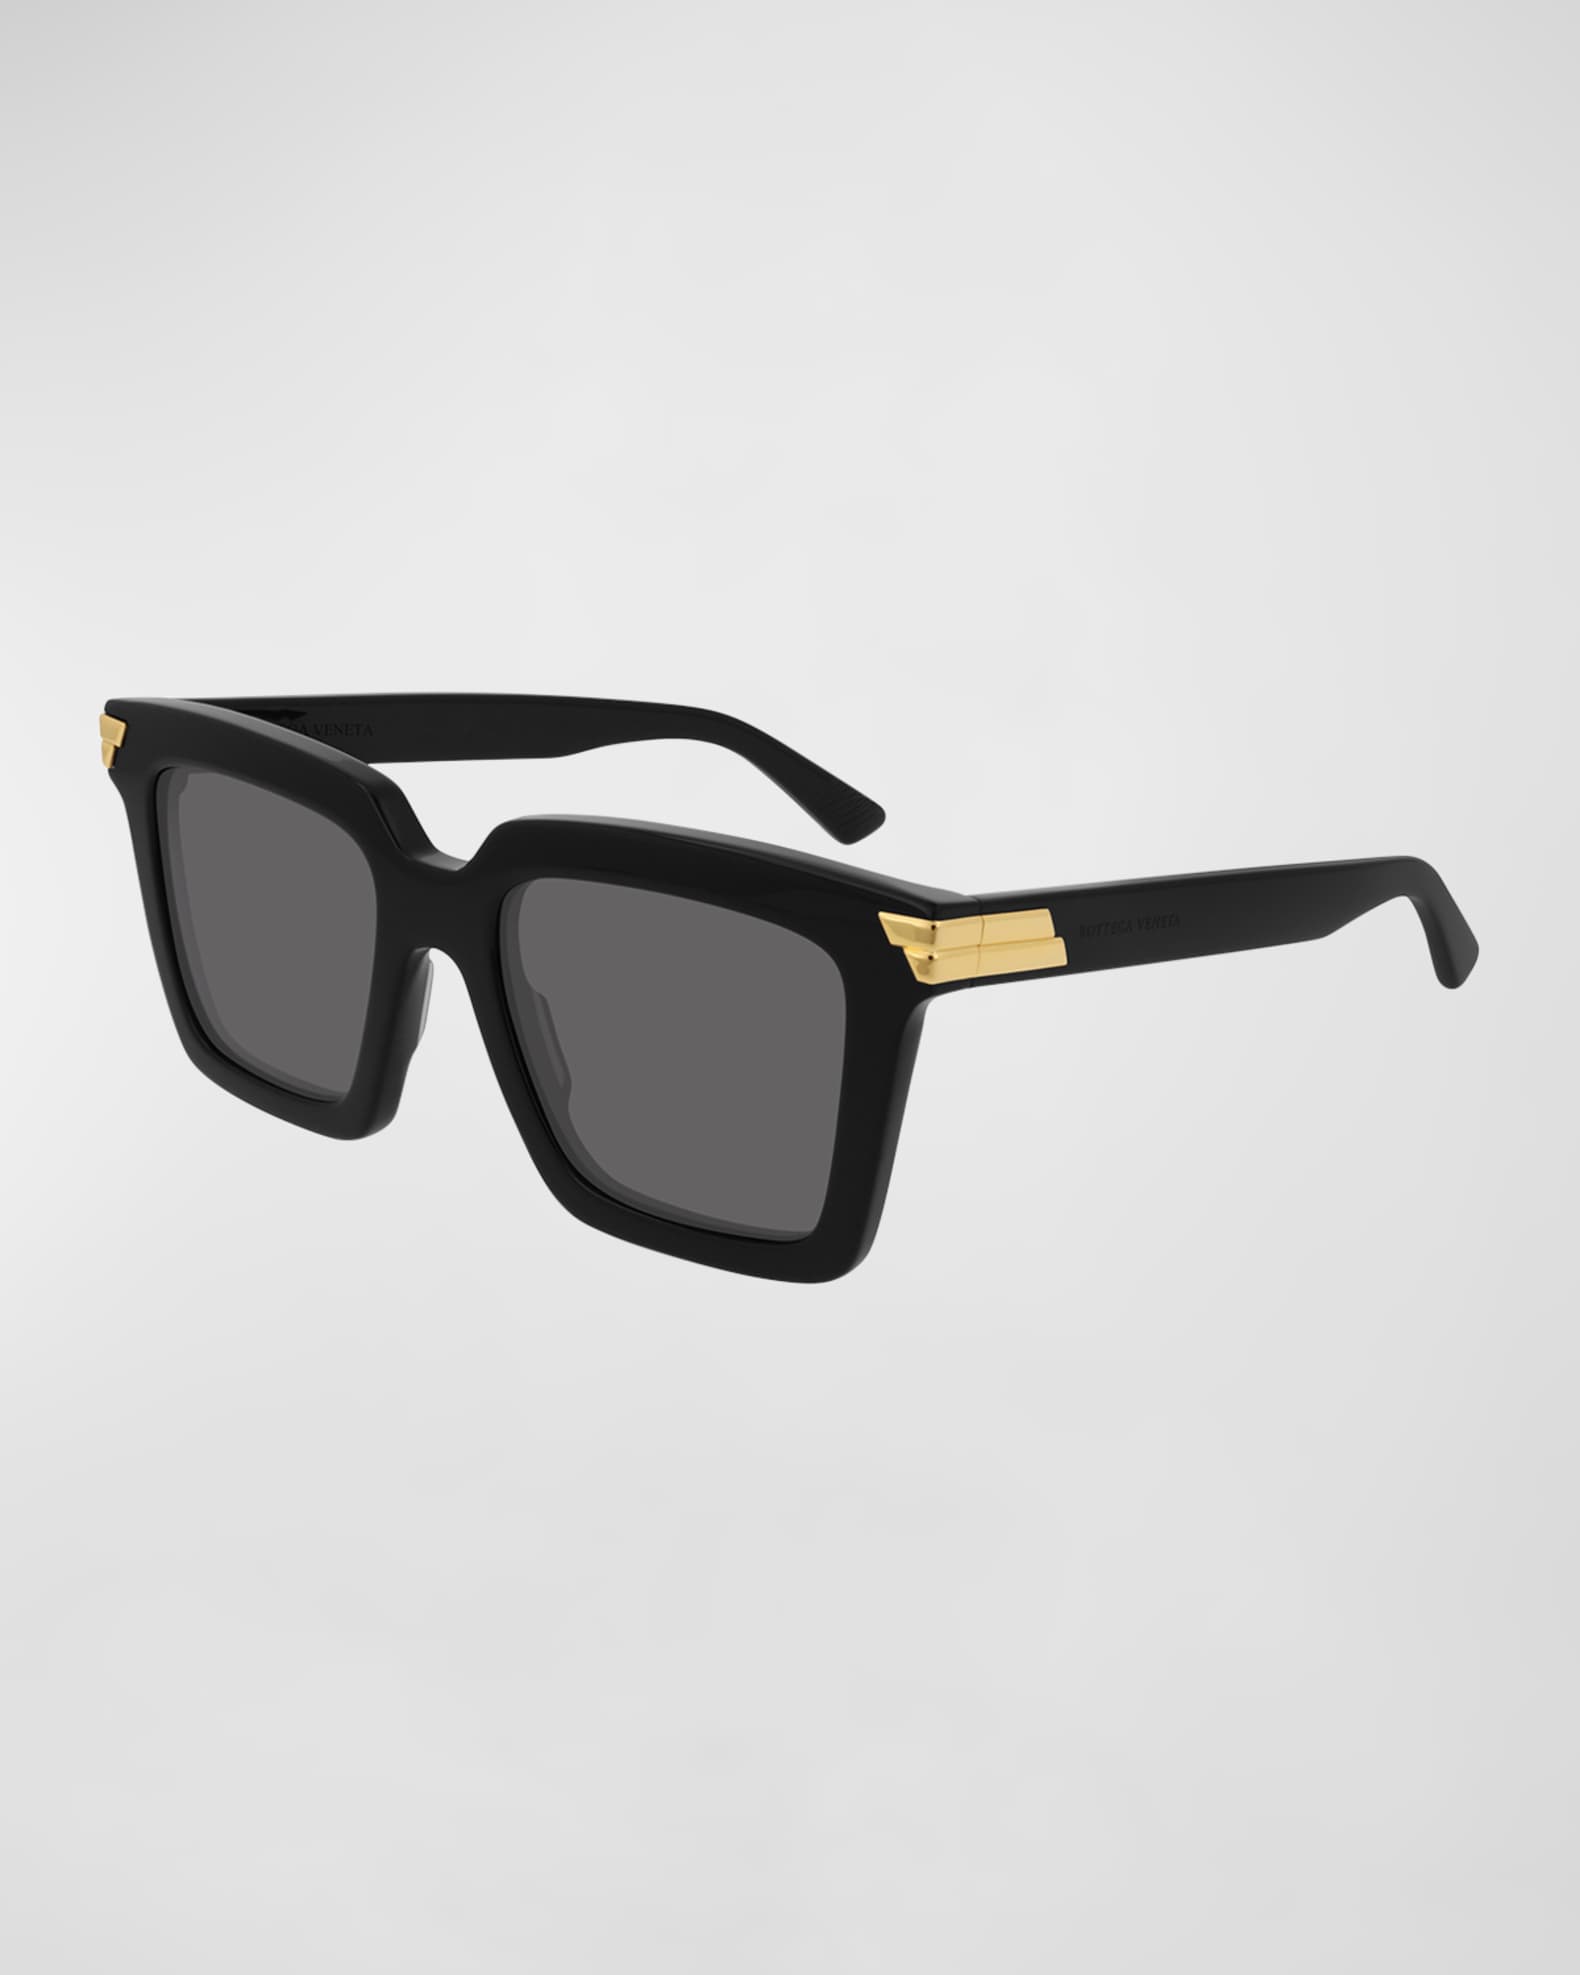 Louis Vuitton Flower Edge Square Sunglasses Black Plastic. Size E